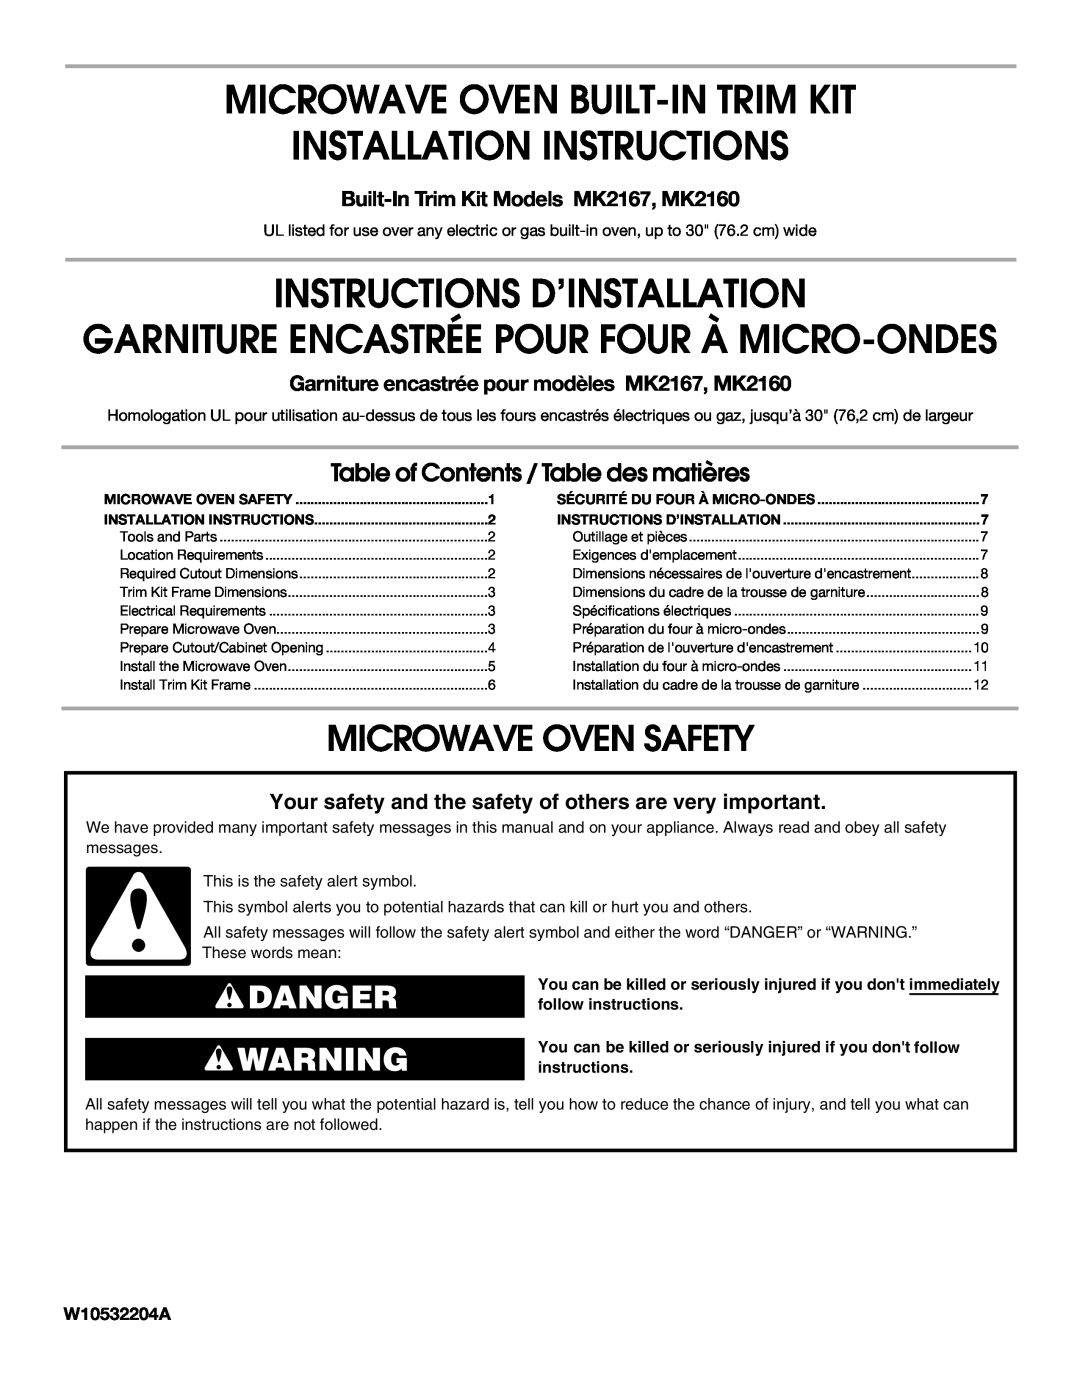 Whirlpool MK2167 installation instructions Garniture Encastrée Pour Four À Micro-Ondes, Microwave Oven Safety, Danger 